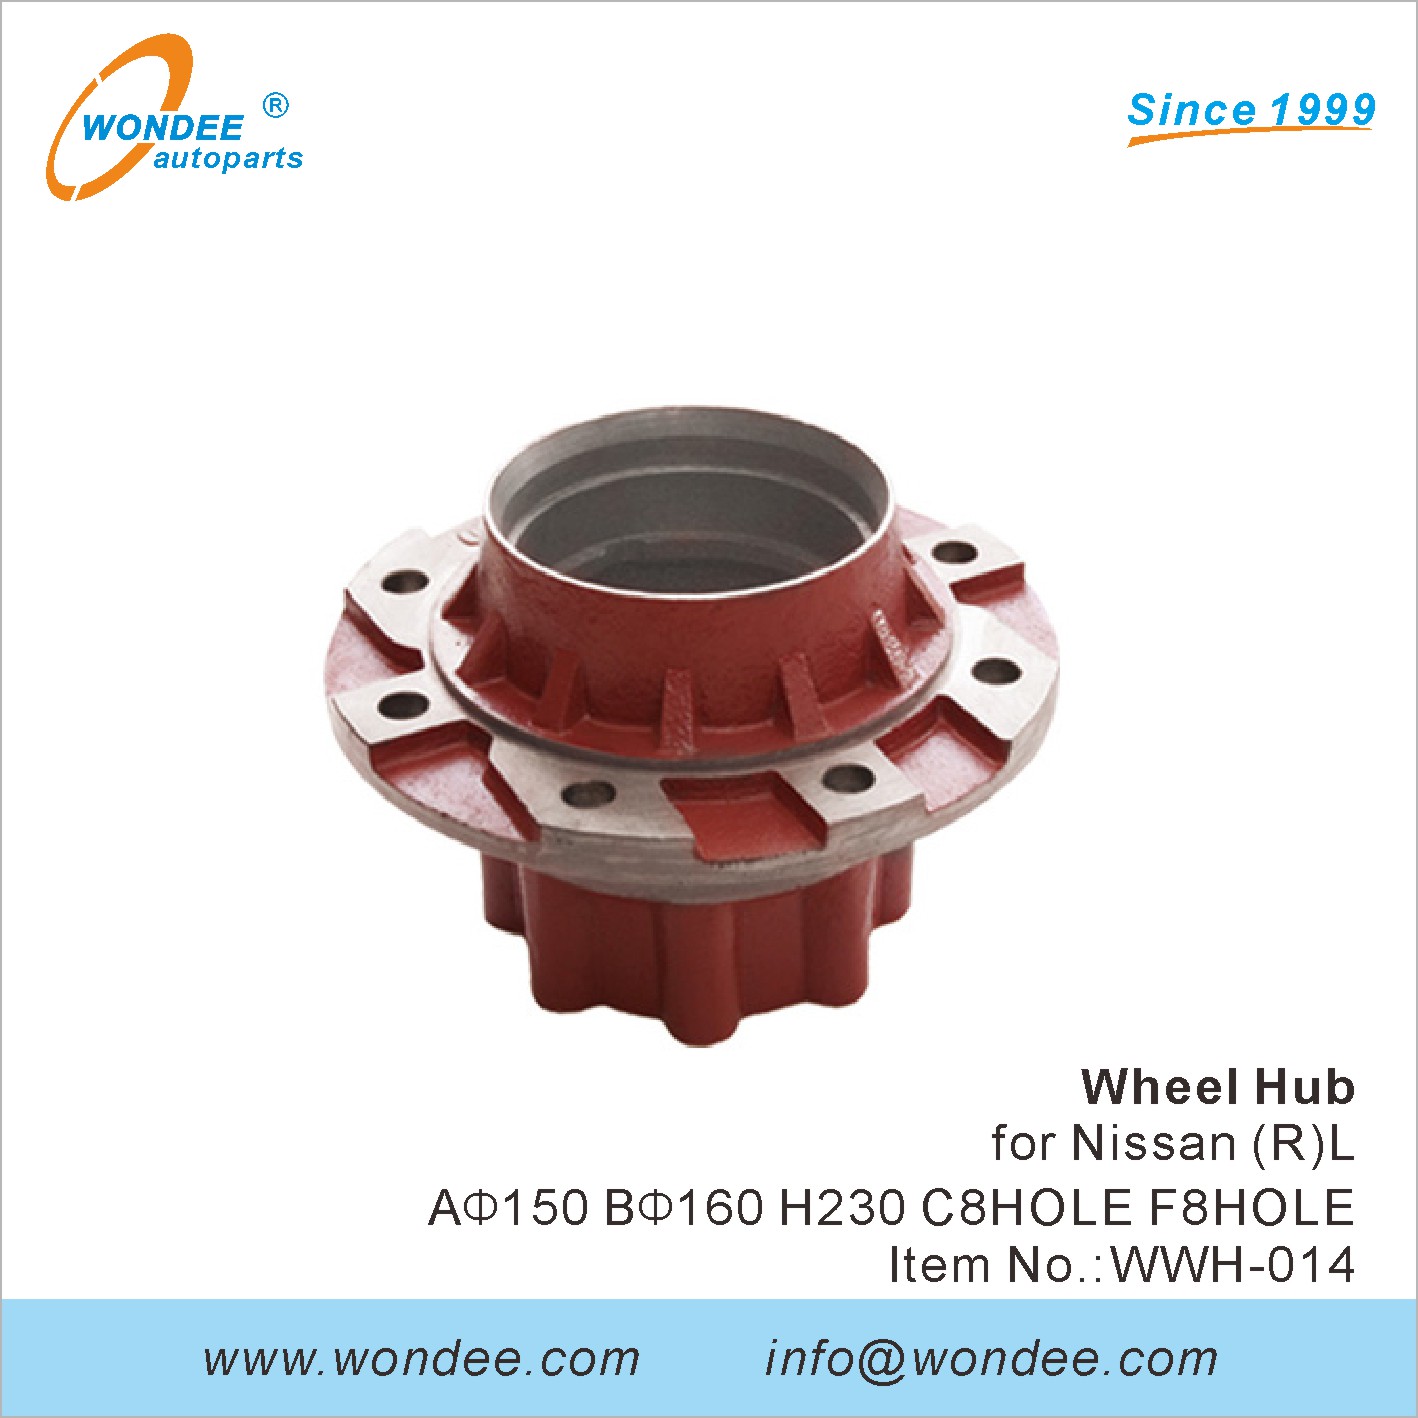 WONDEE wheel hub (14)